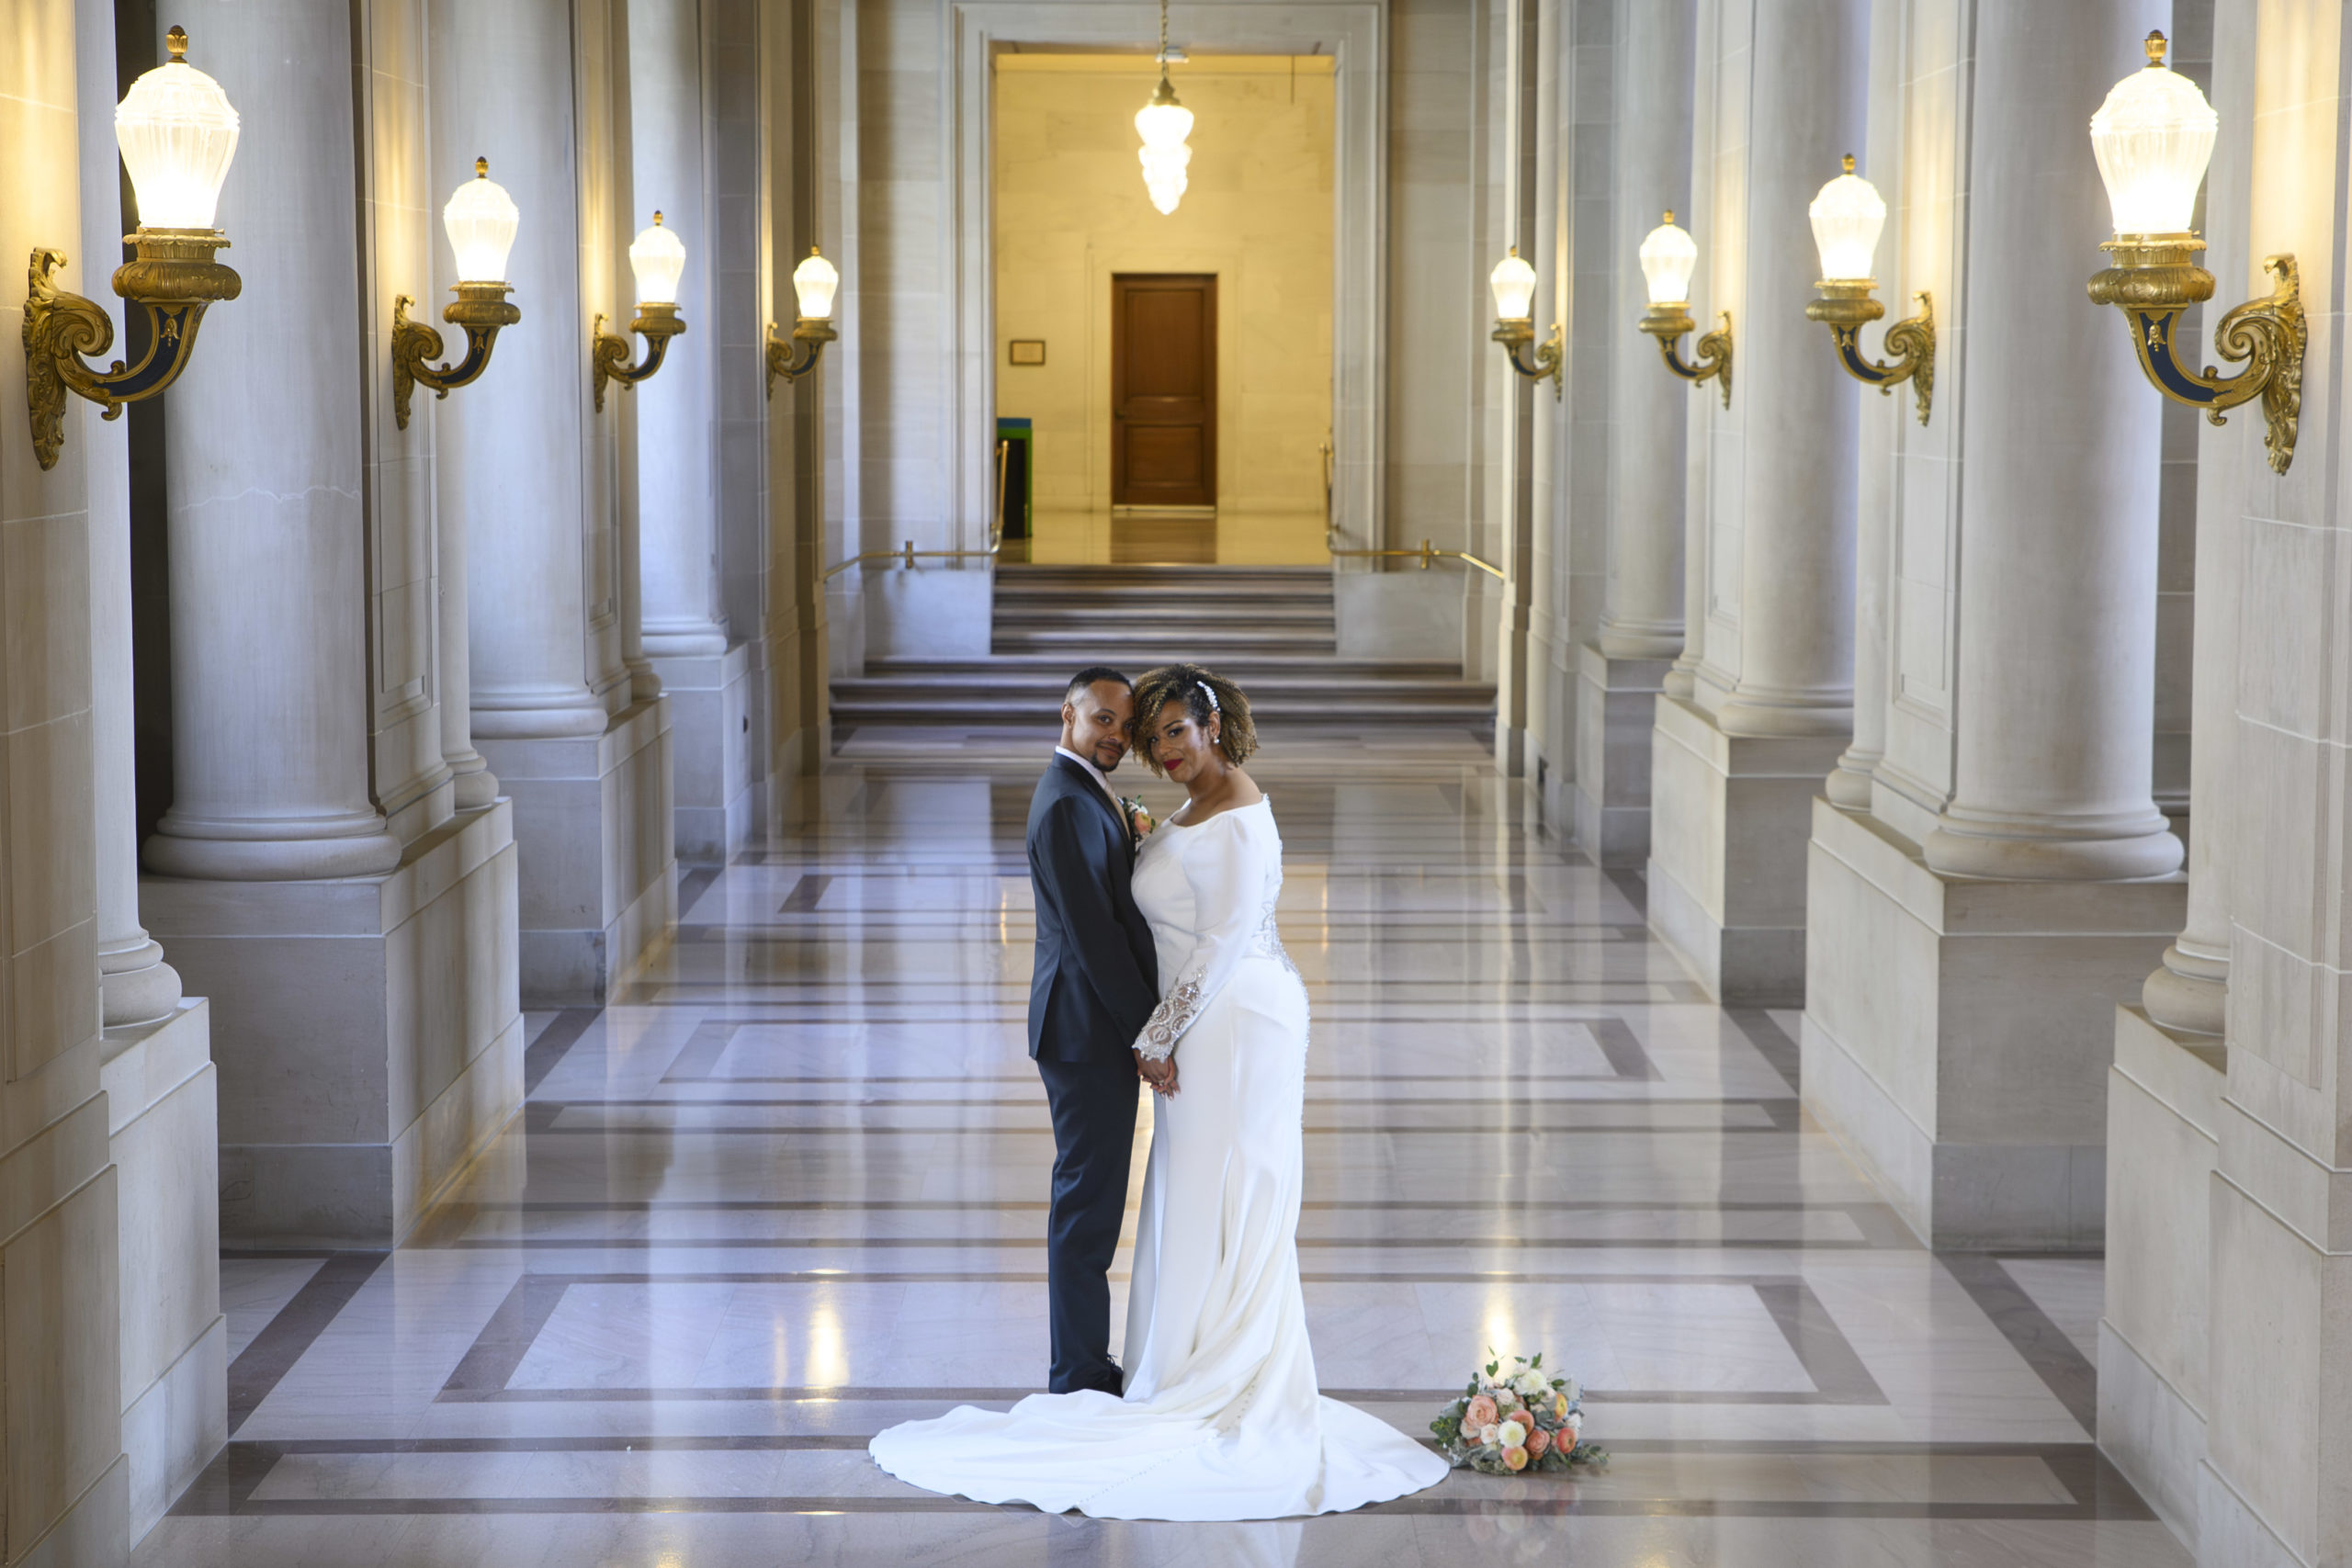 City hall wedding photography on the 2nd floor hallway around the corner from the Rotunda.